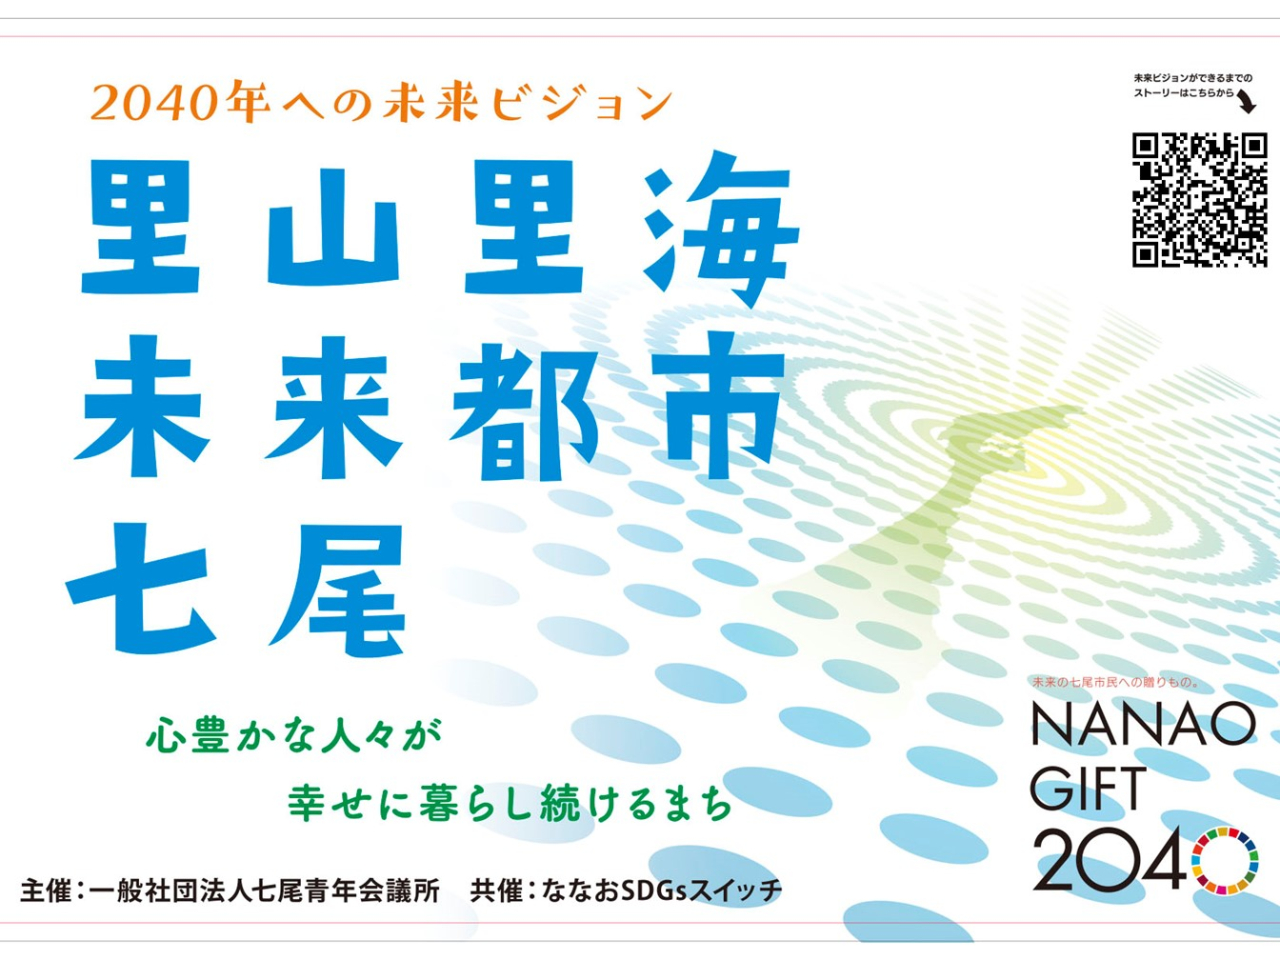 「NANAO GIFT 2040」ビジョンブックダウンロードフォームURL変更のお知らせ